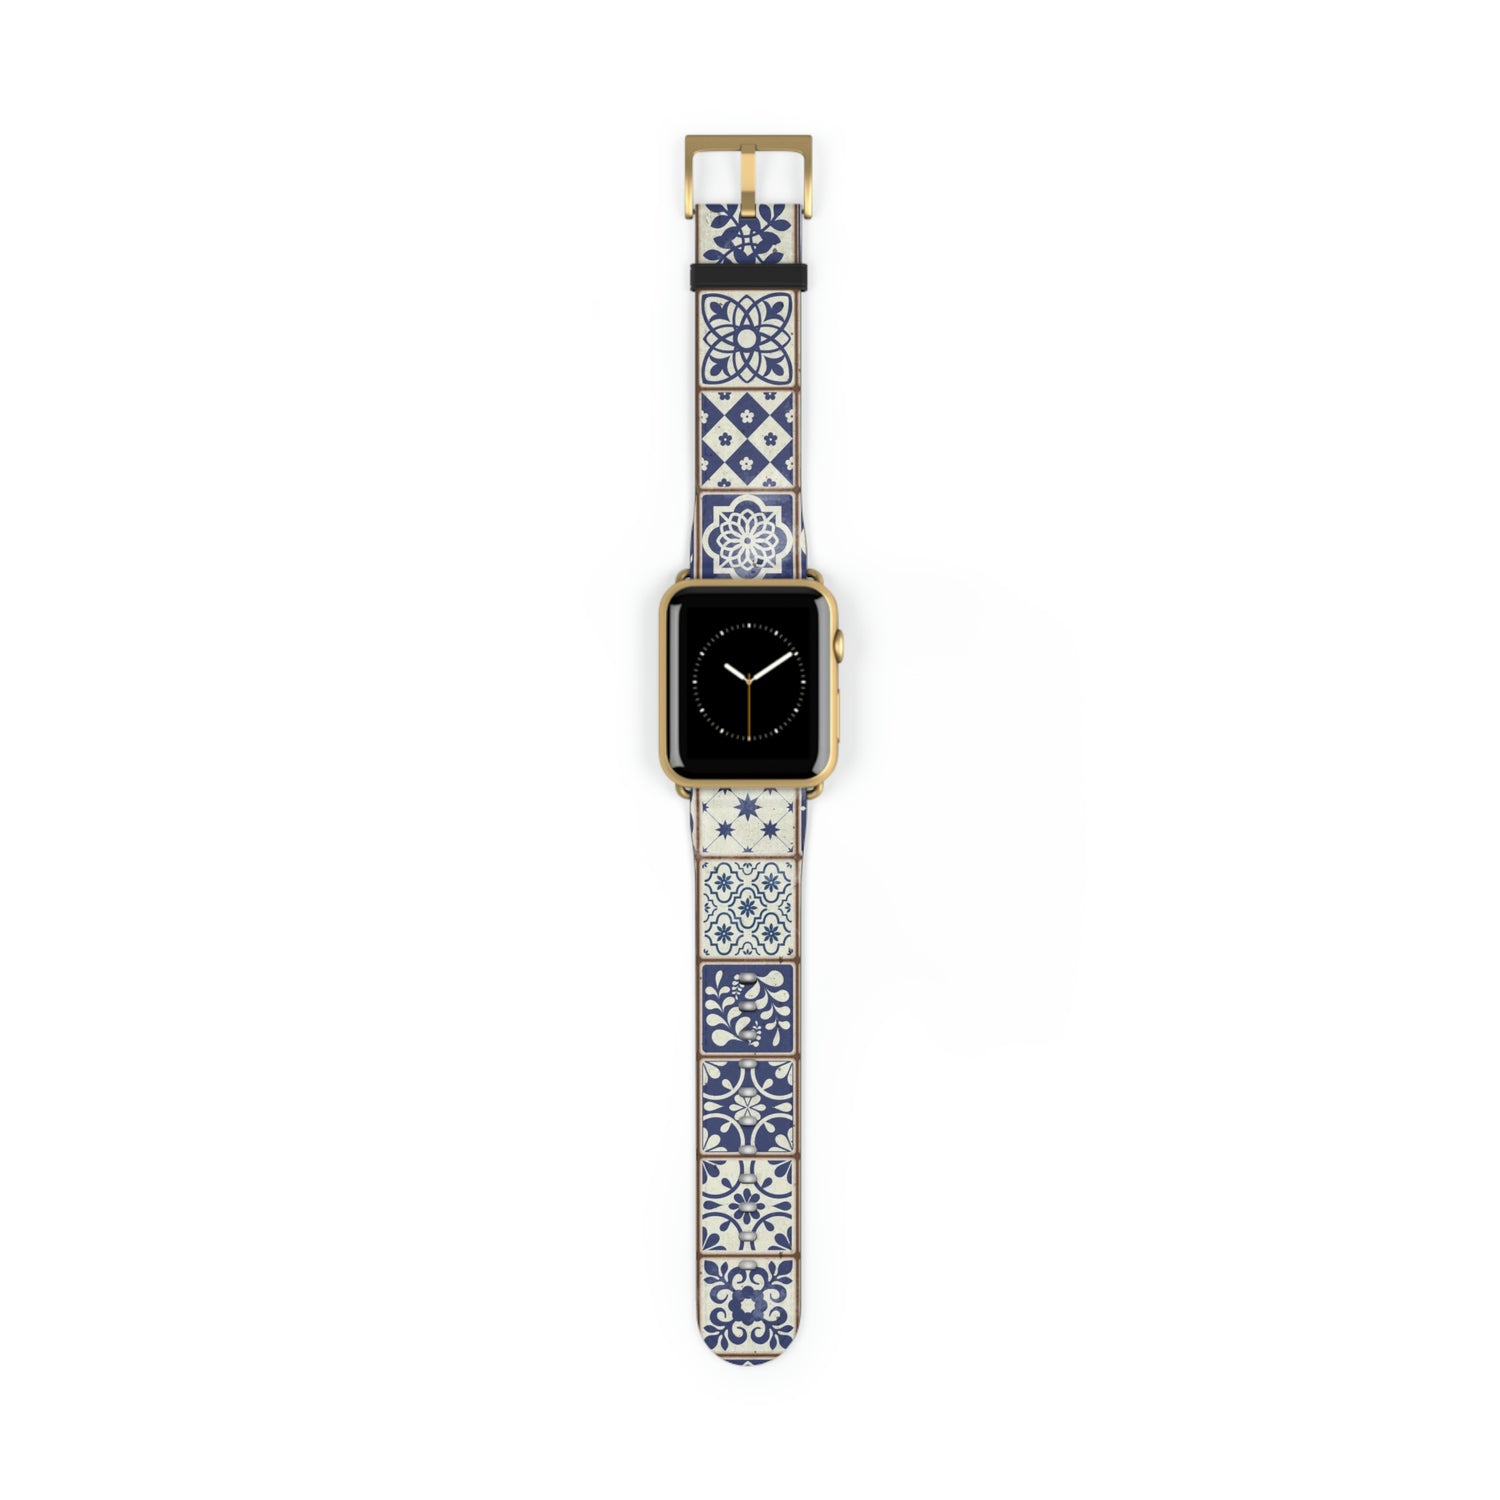 Portuguese Tile Apple Watch Band